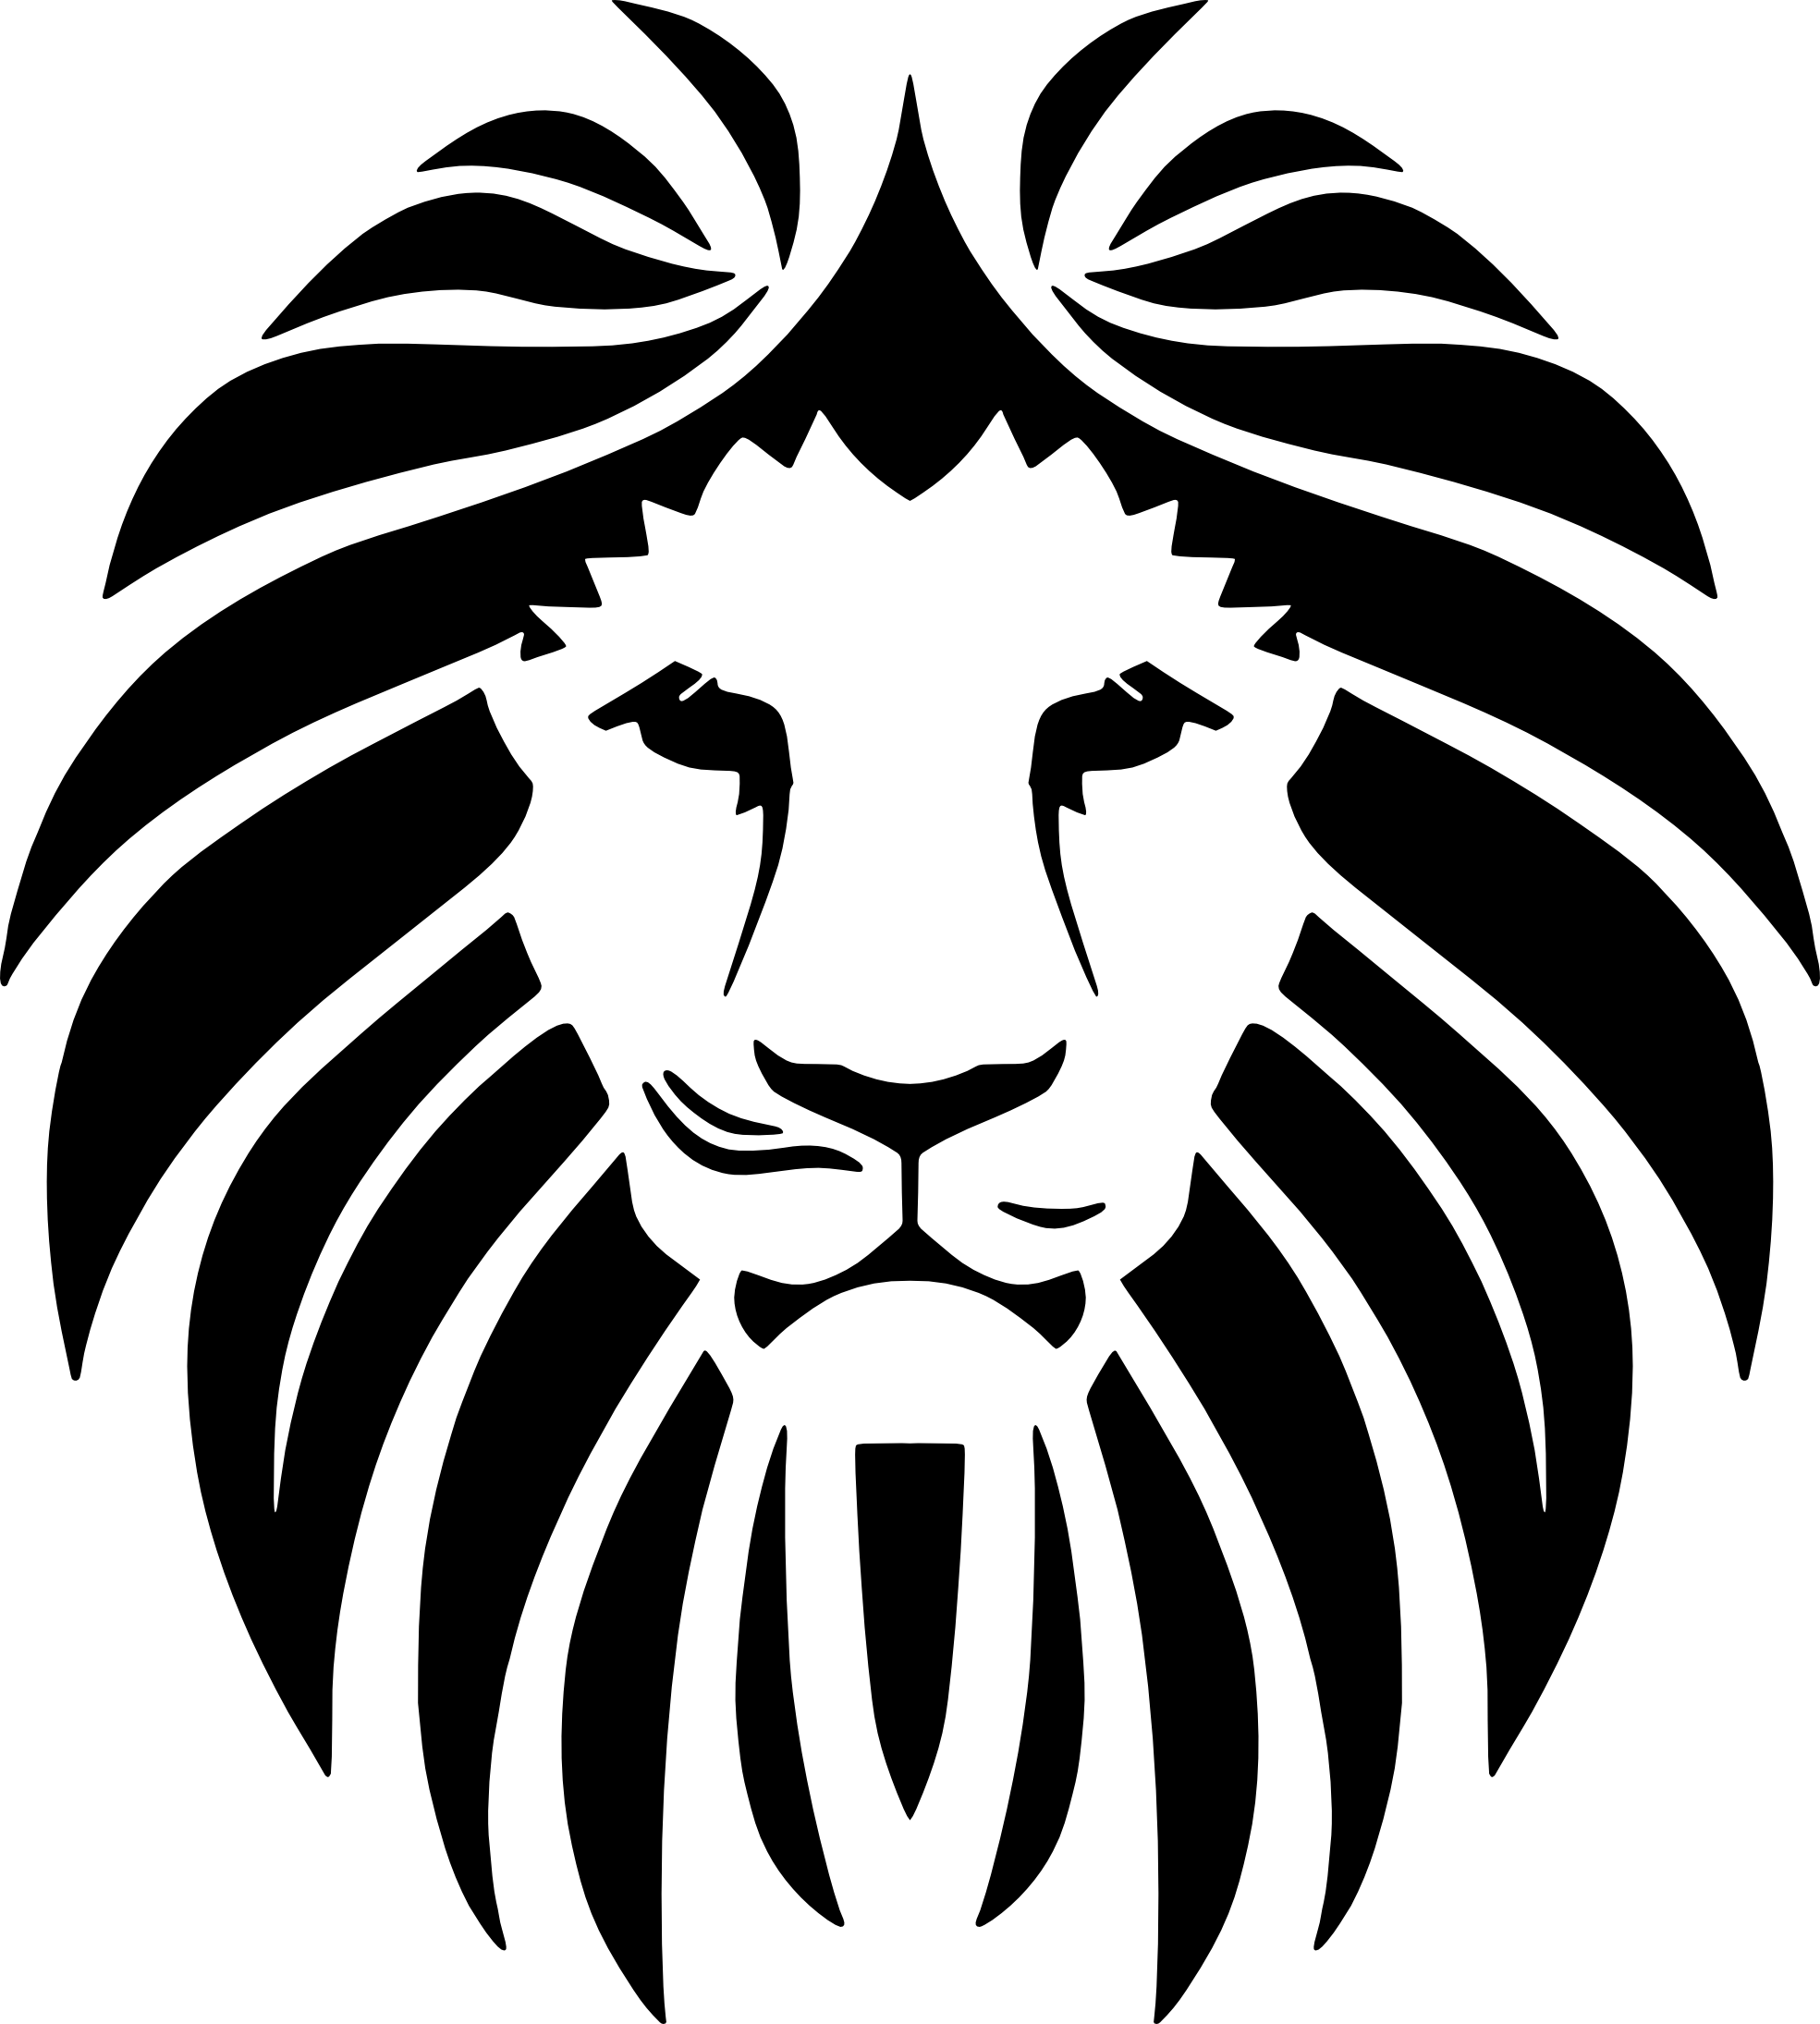 Lion of Judah Logo - clipartist.net Search Results lion. lion of judah logos ideas